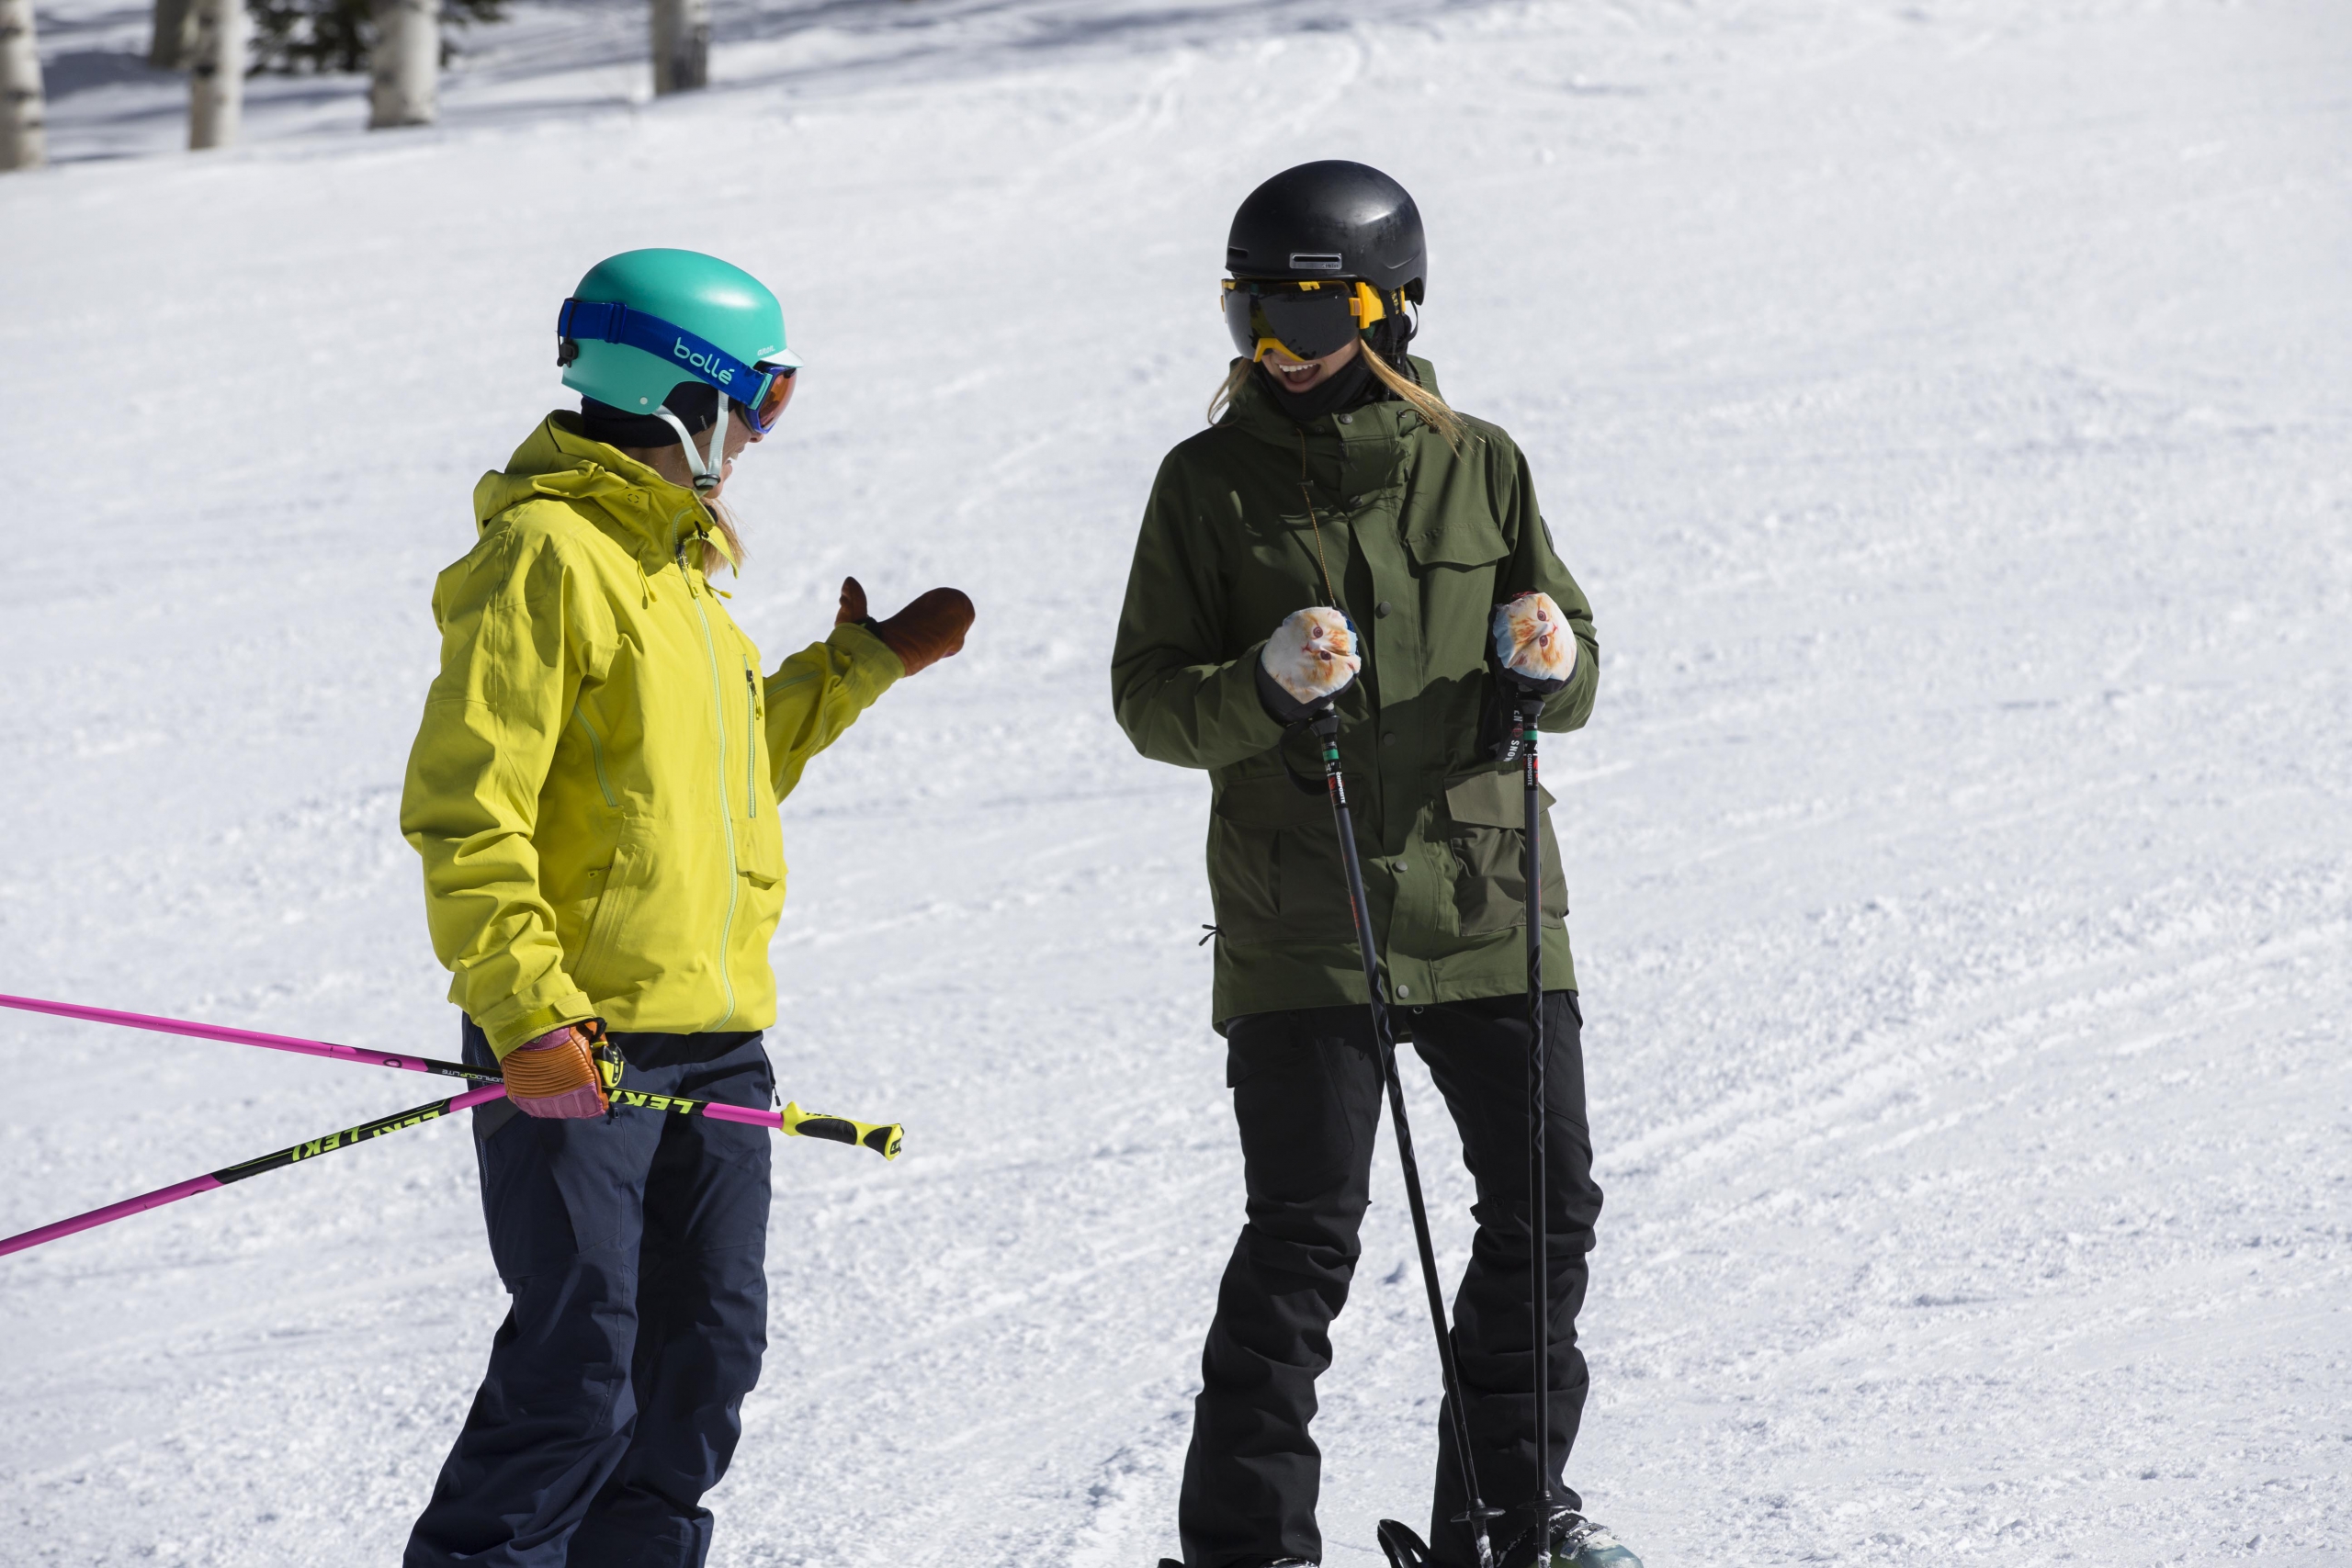 Ski instructor Robin Barnes talks to her student on the slope